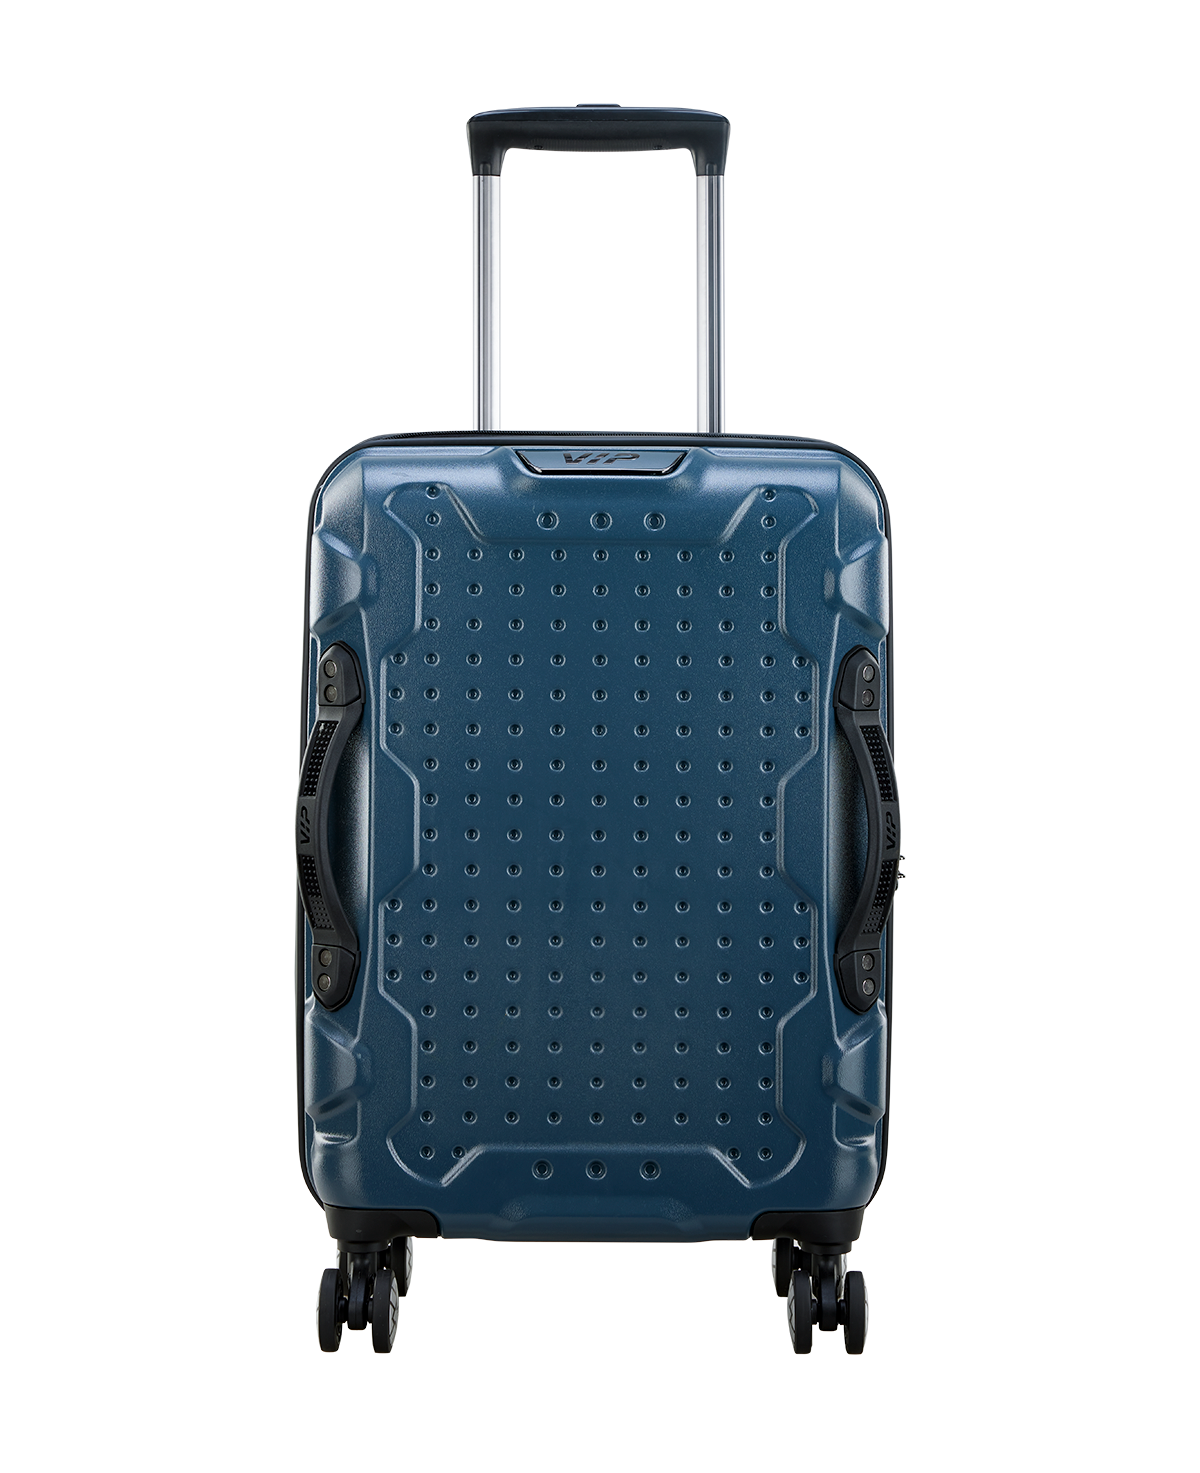 Buy Vip Vectra Suitcase Midnight Blue Online - Best Price Vip Vectra  Suitcase Midnight Blue - Justdial Shop Online.